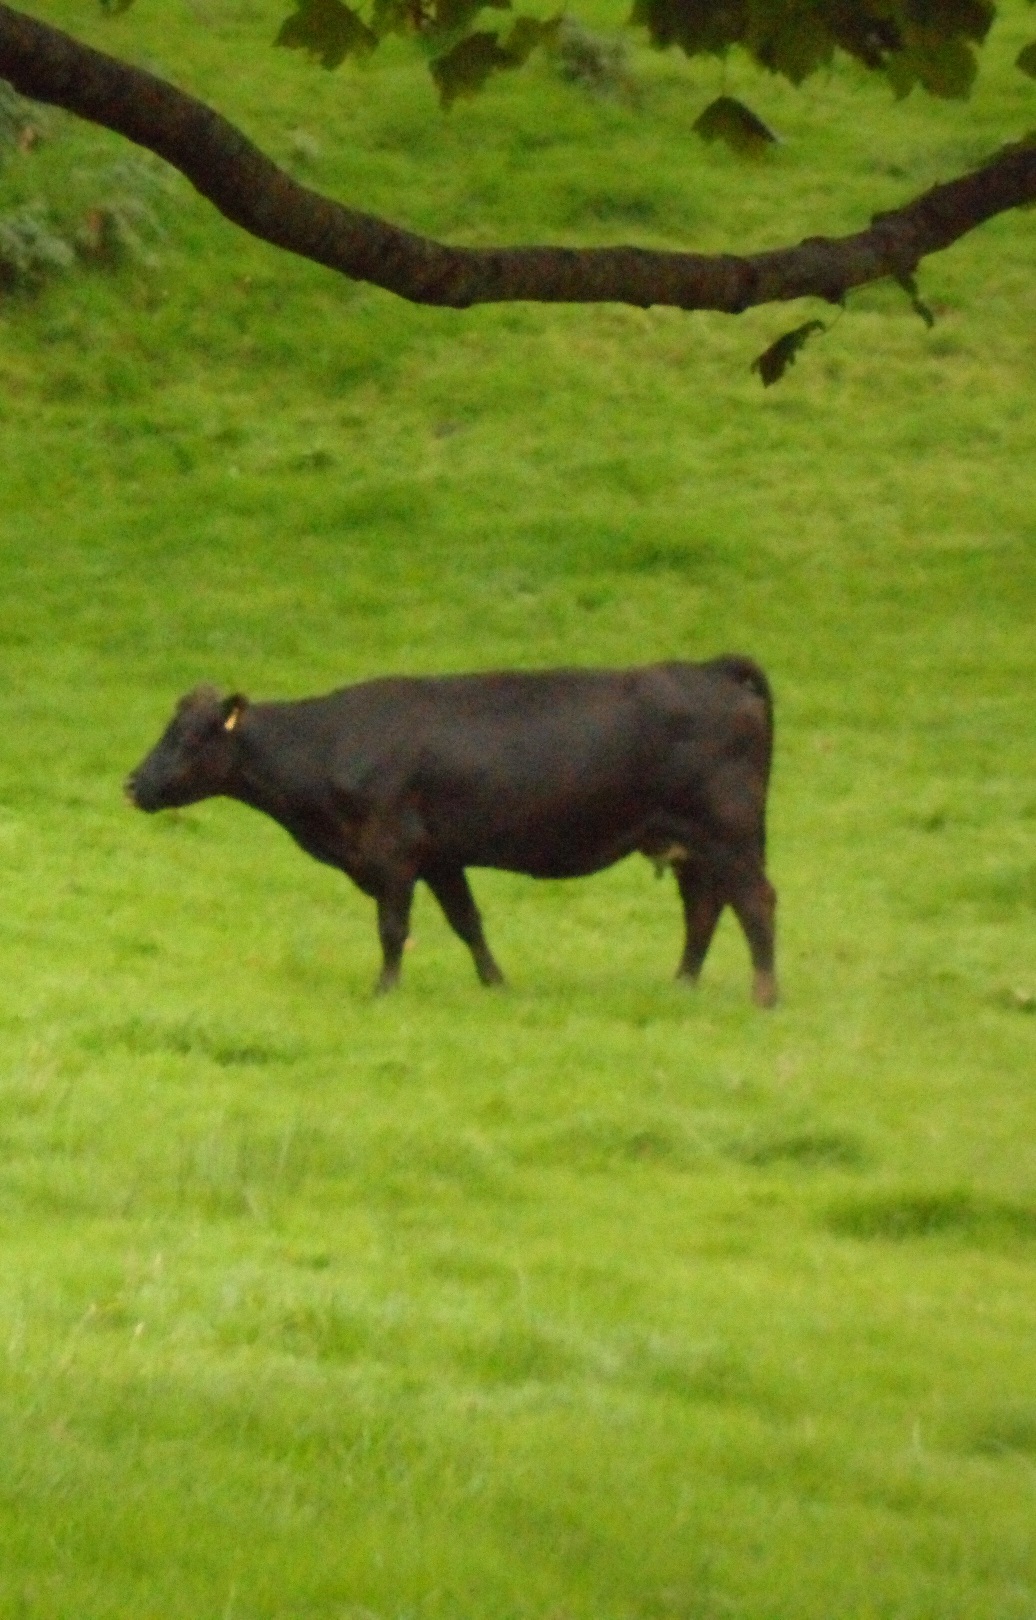 a Cow in a field